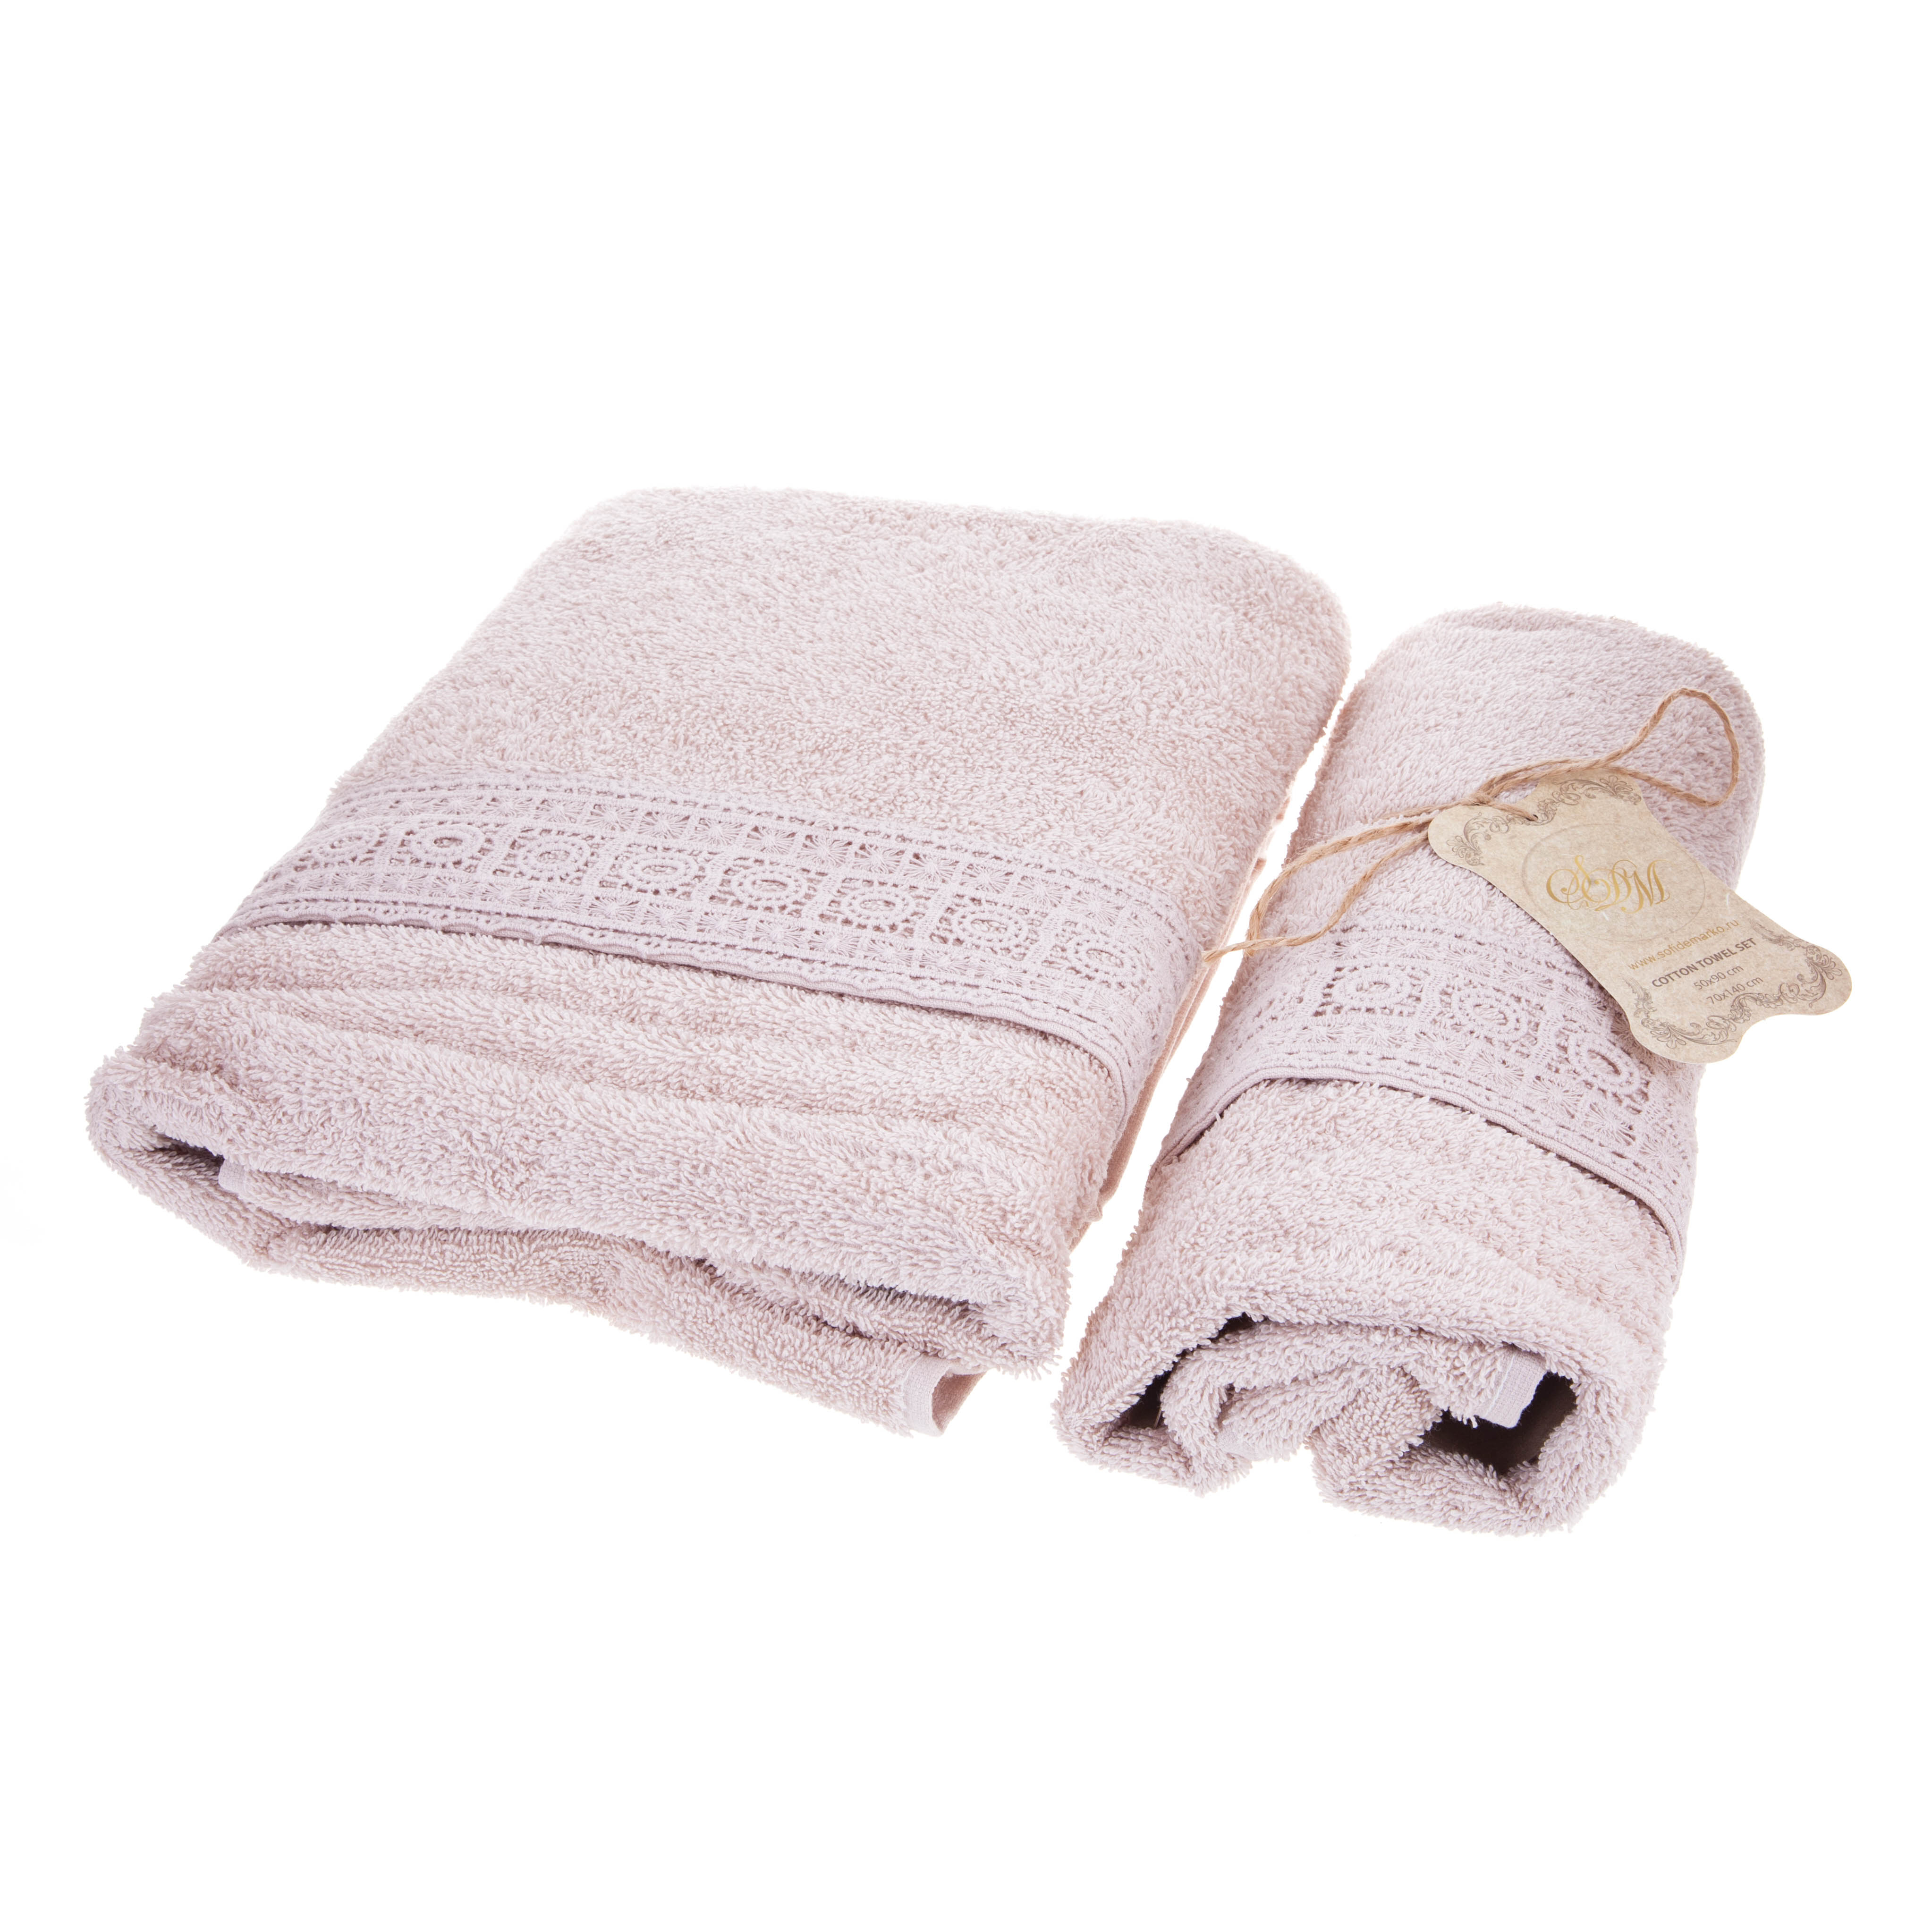 Полотенца с вышивкой katia Sofi de marko S.070 полотенца с вышивкой katia sofi de marko s 070